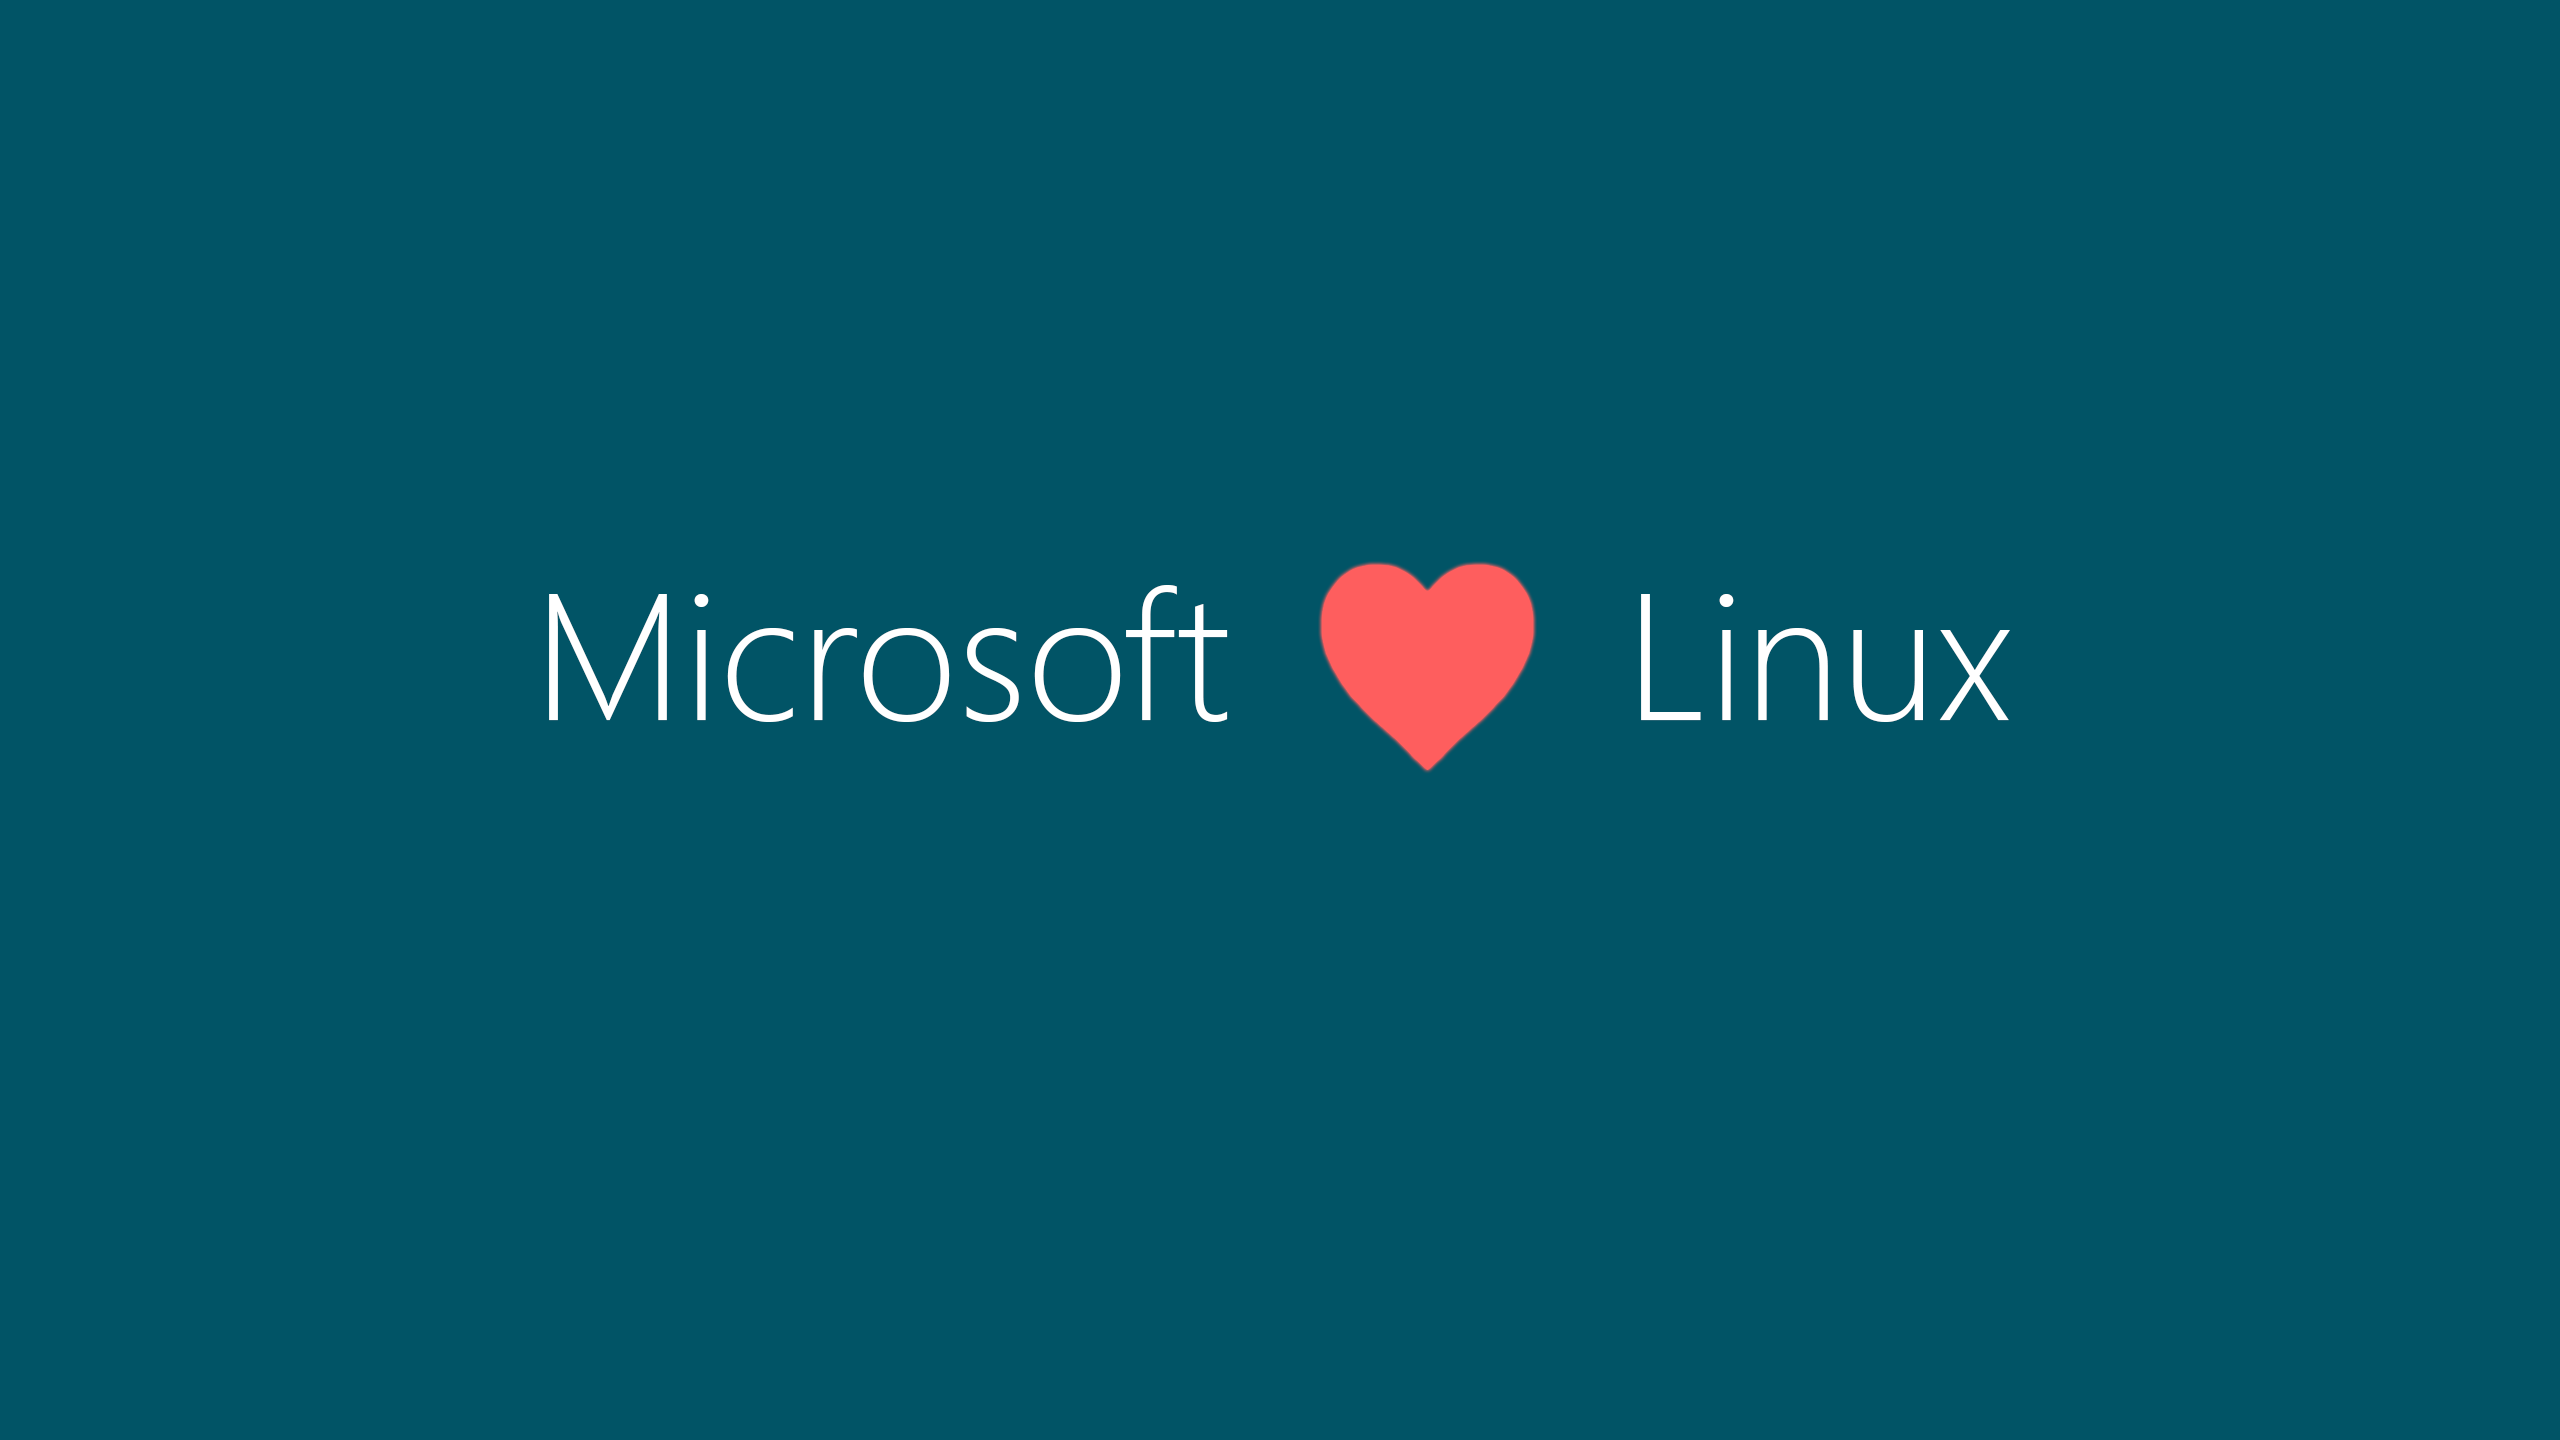 Microsoft ♥ Linux